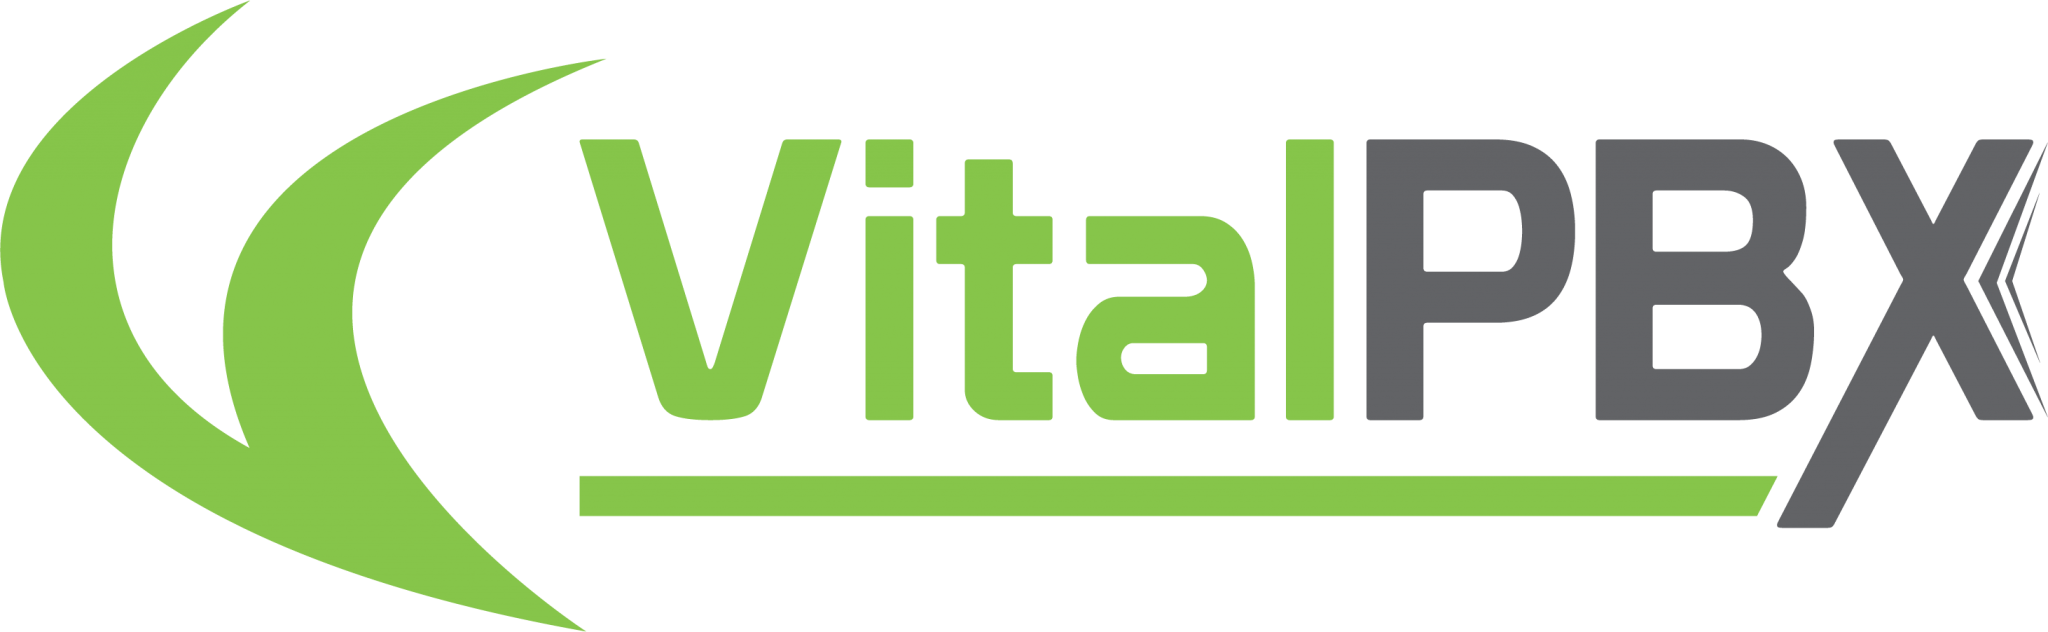 VitalPBX_Logo-Colour